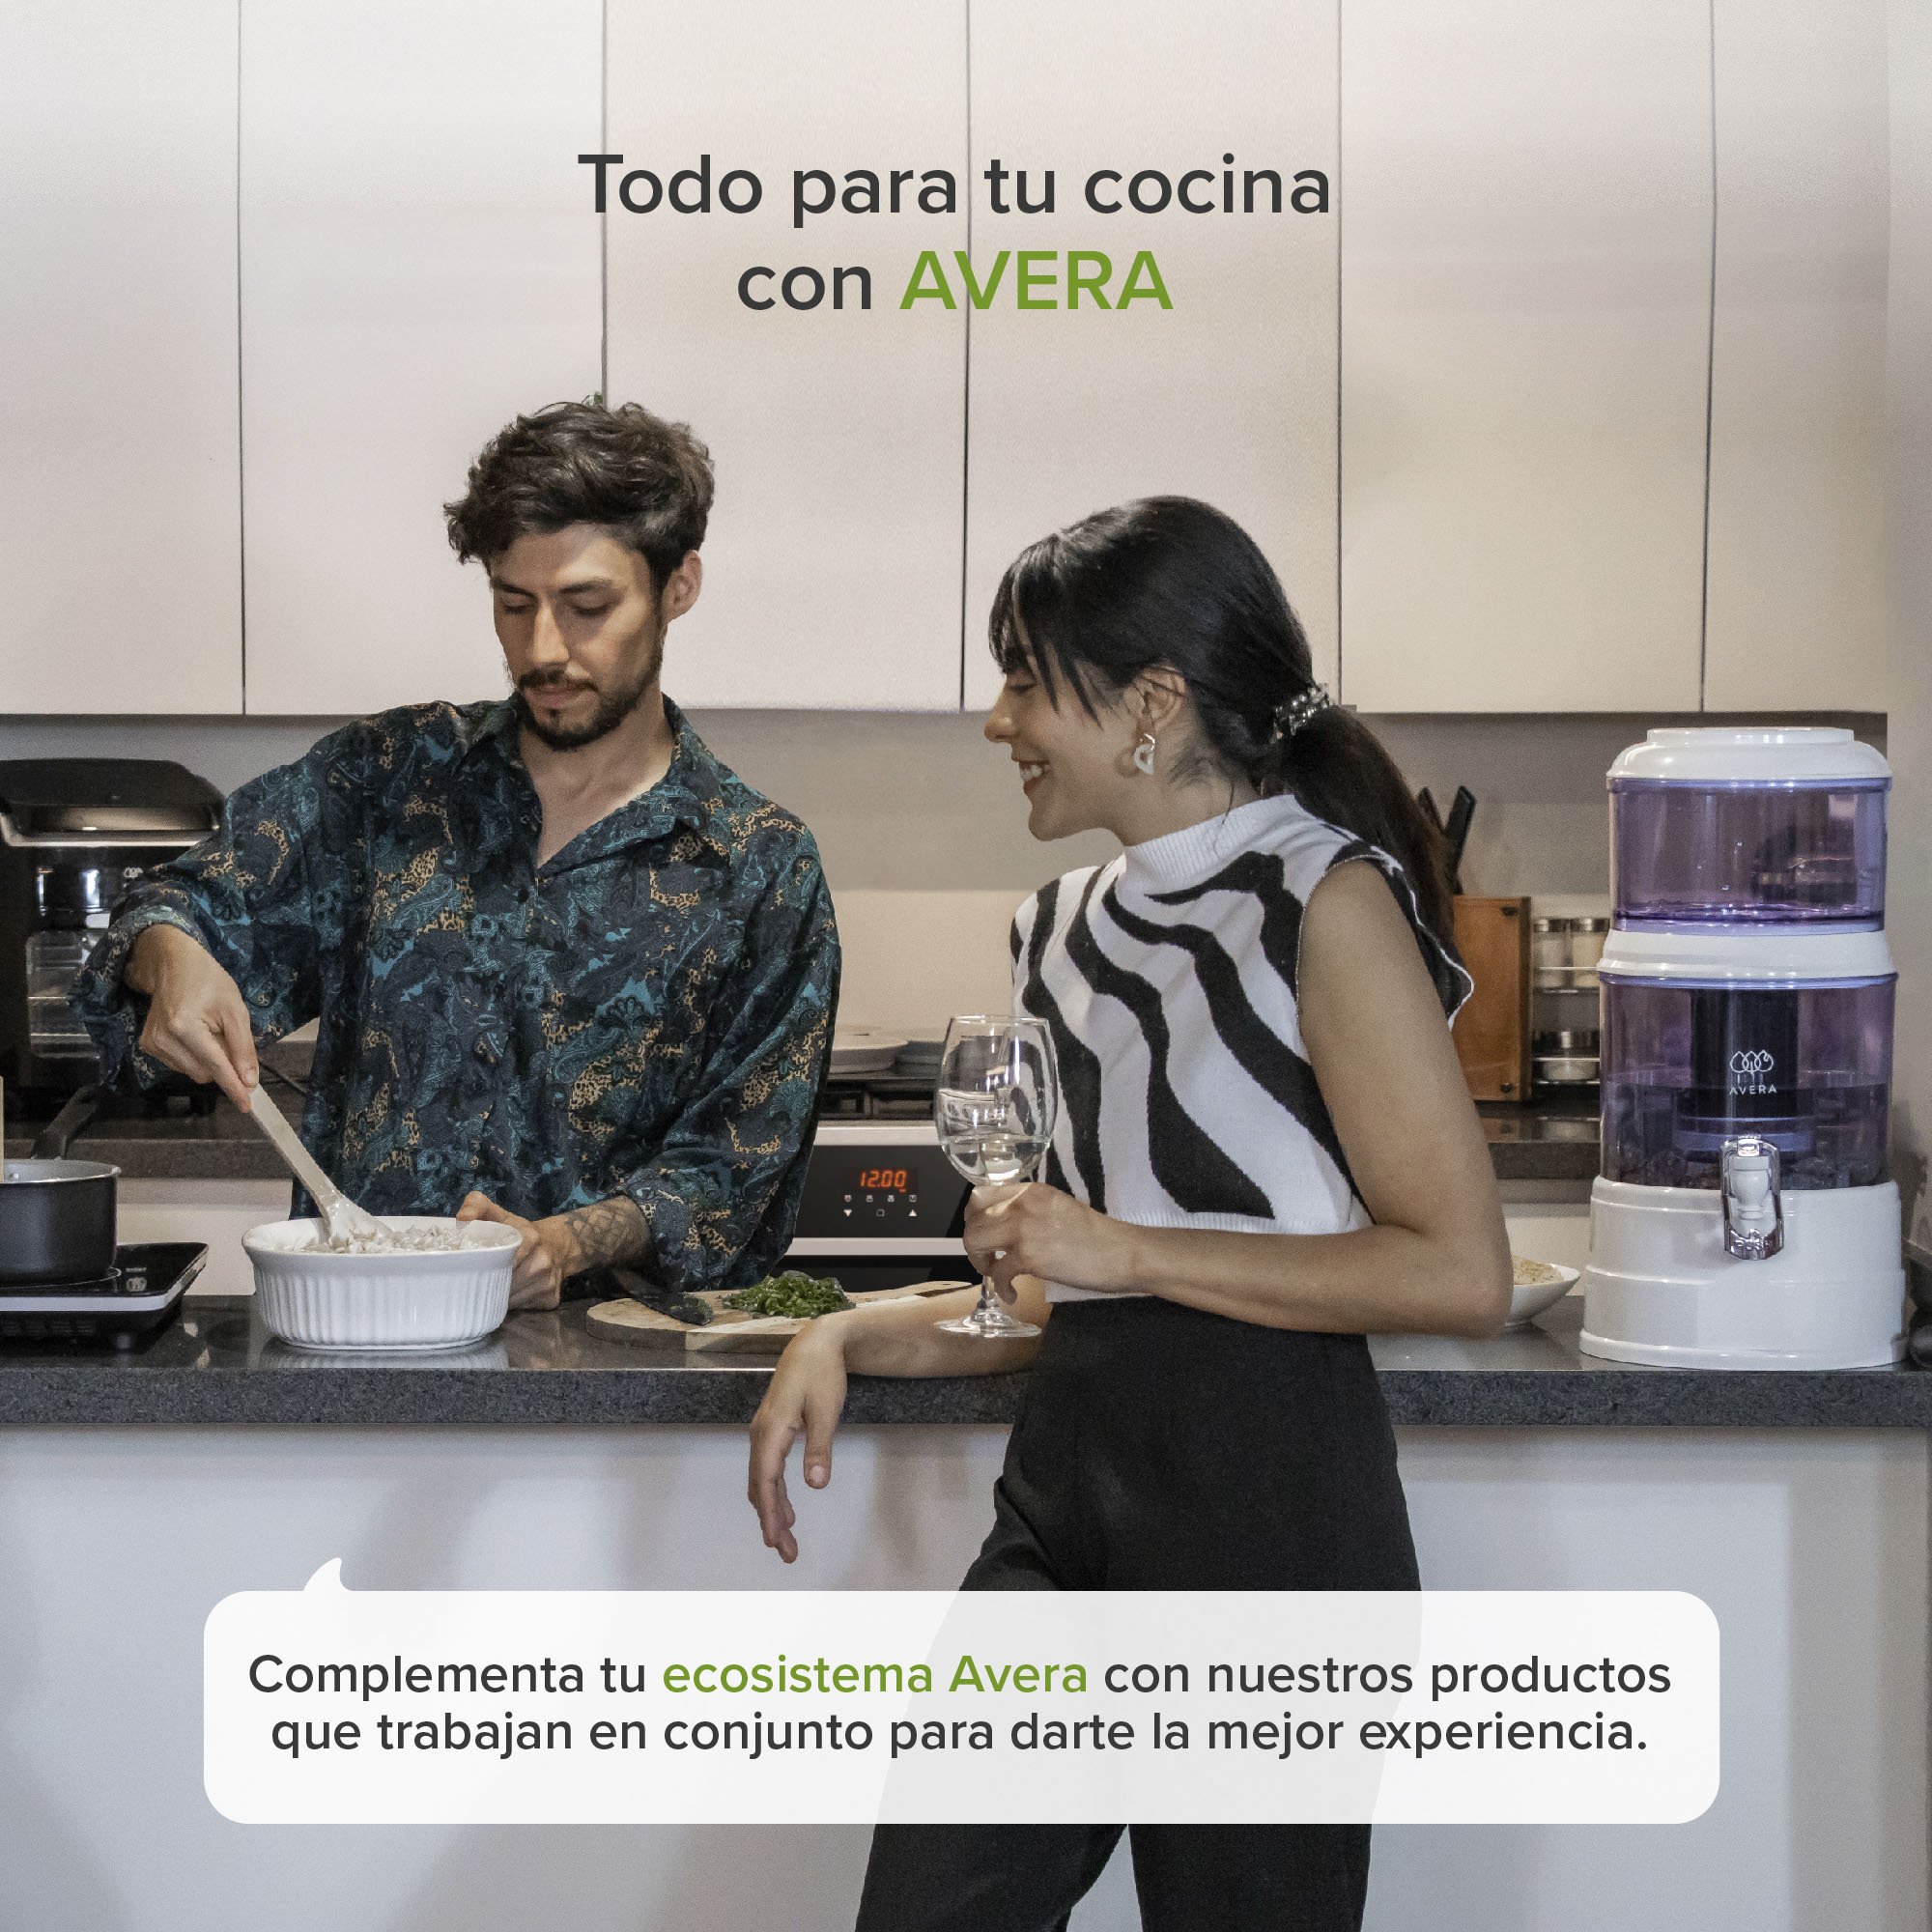 Robot De Cocina Avera Chef WiFi Recetas Incluidas RC01